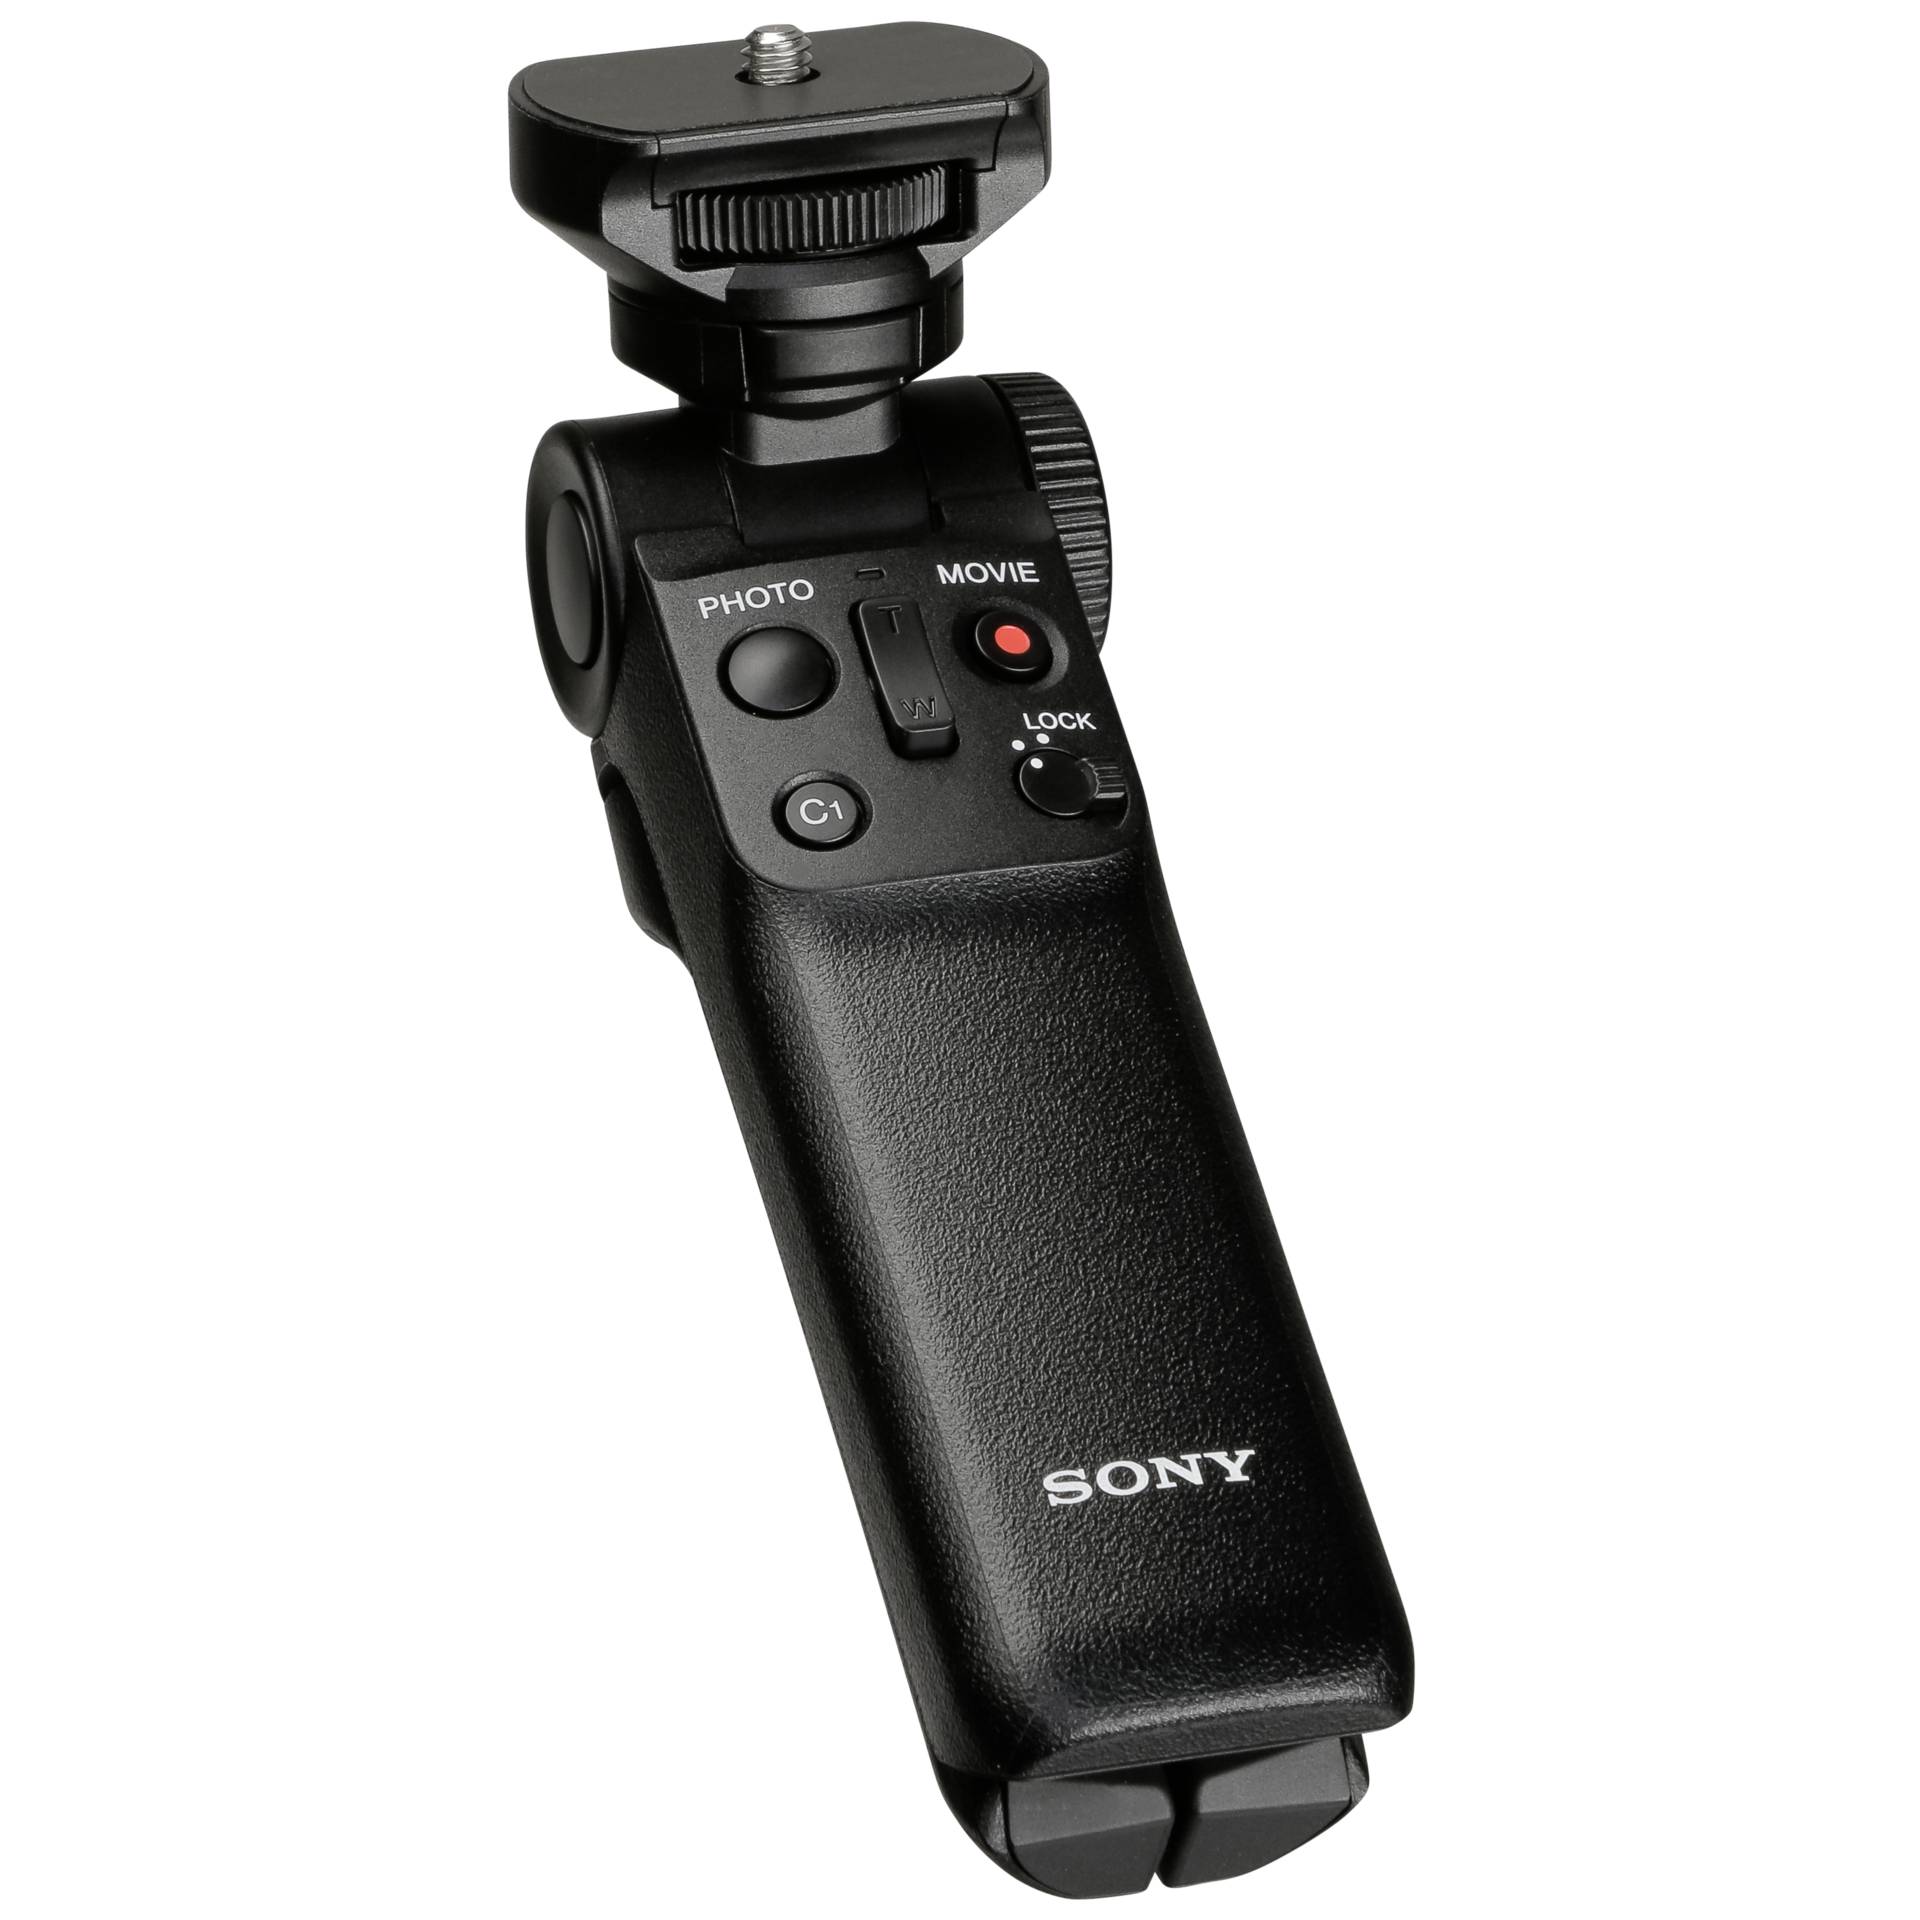 Sony GP-VPT2BT Bluetooth Vlogging Accessory handle